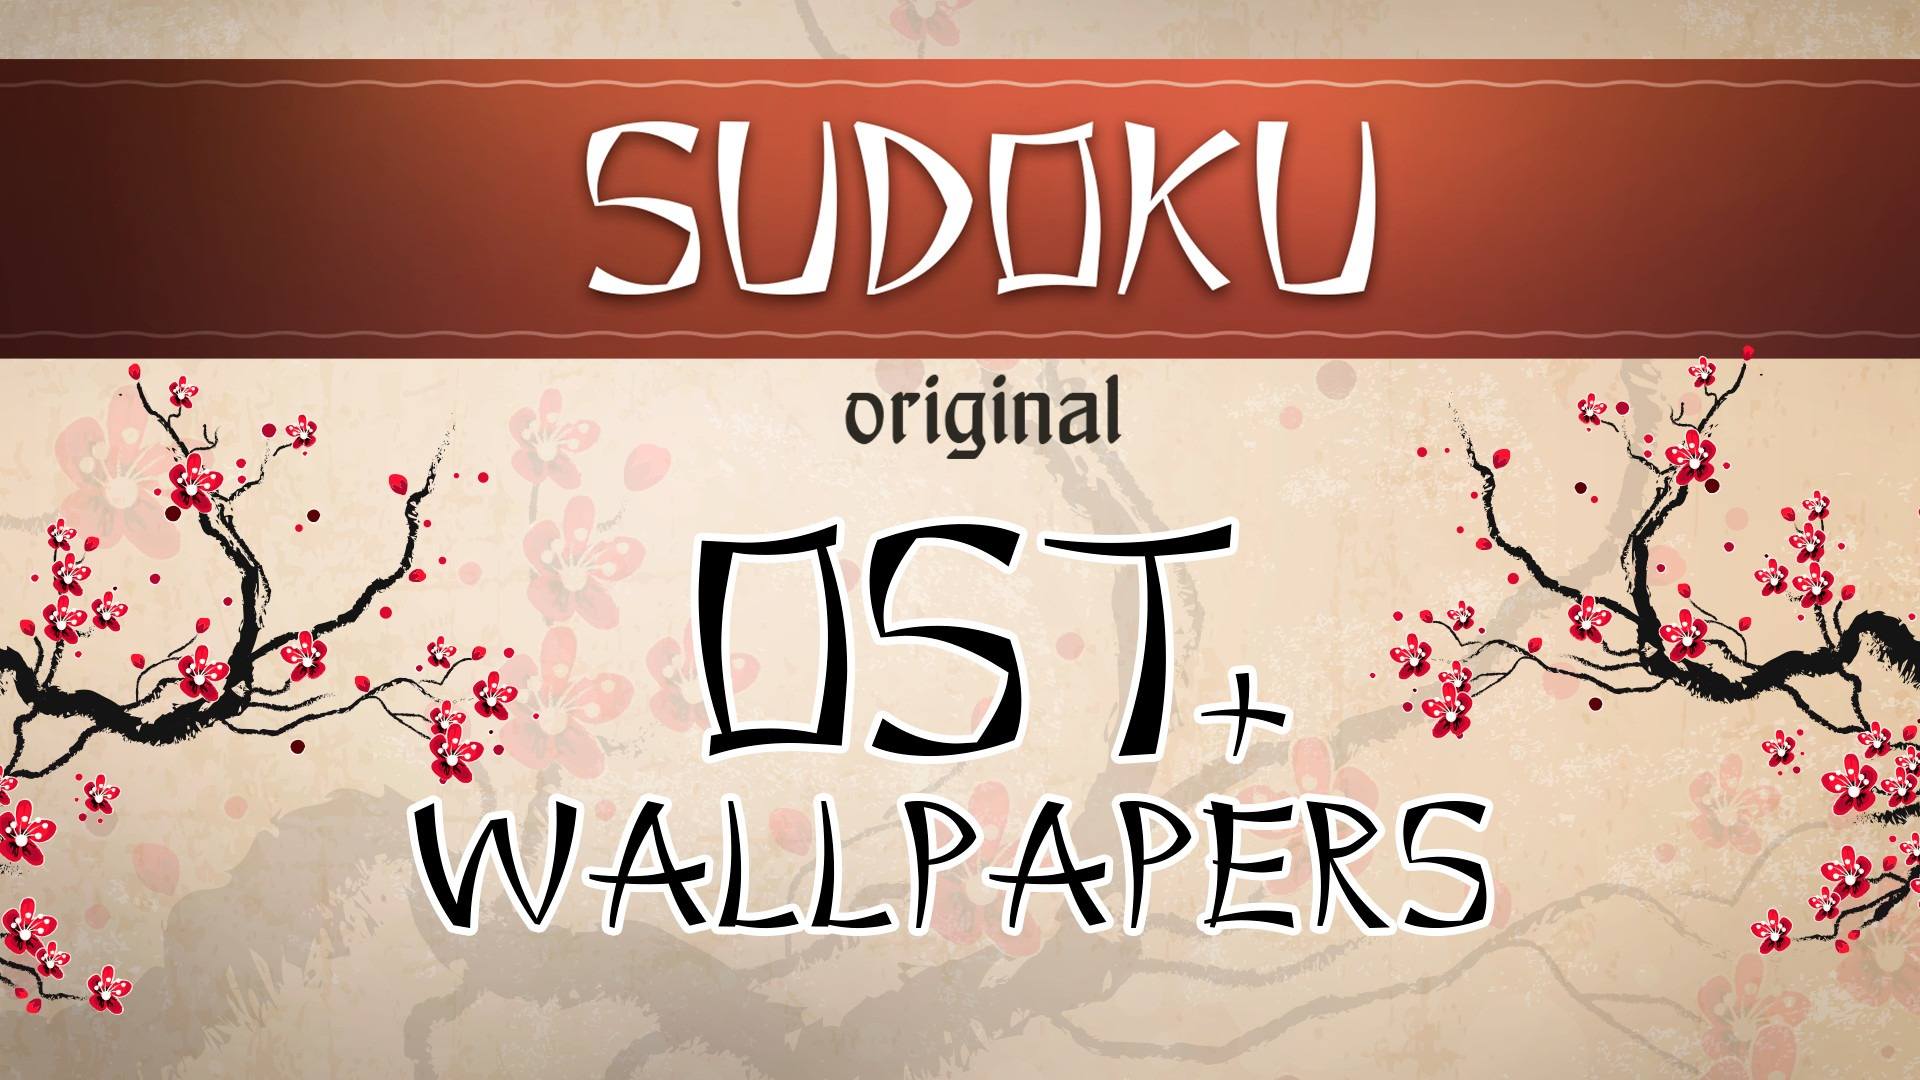 Buy cheap Sudoku Original & Wallpaper cd key at the best price